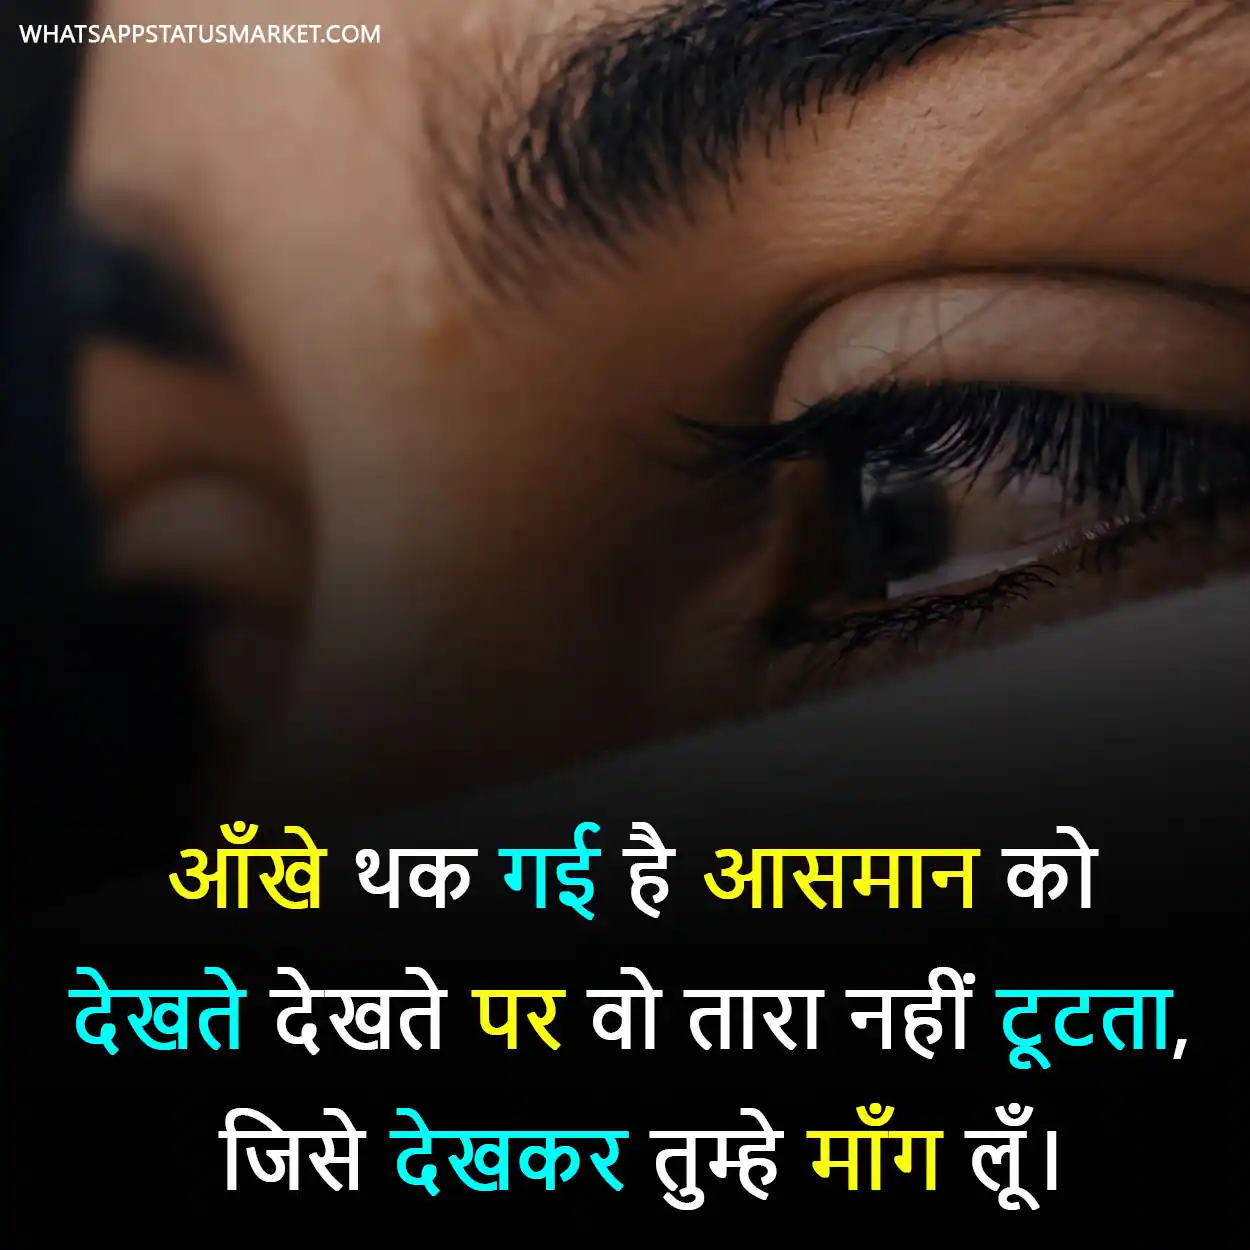 sad shayari for girl in hindi images